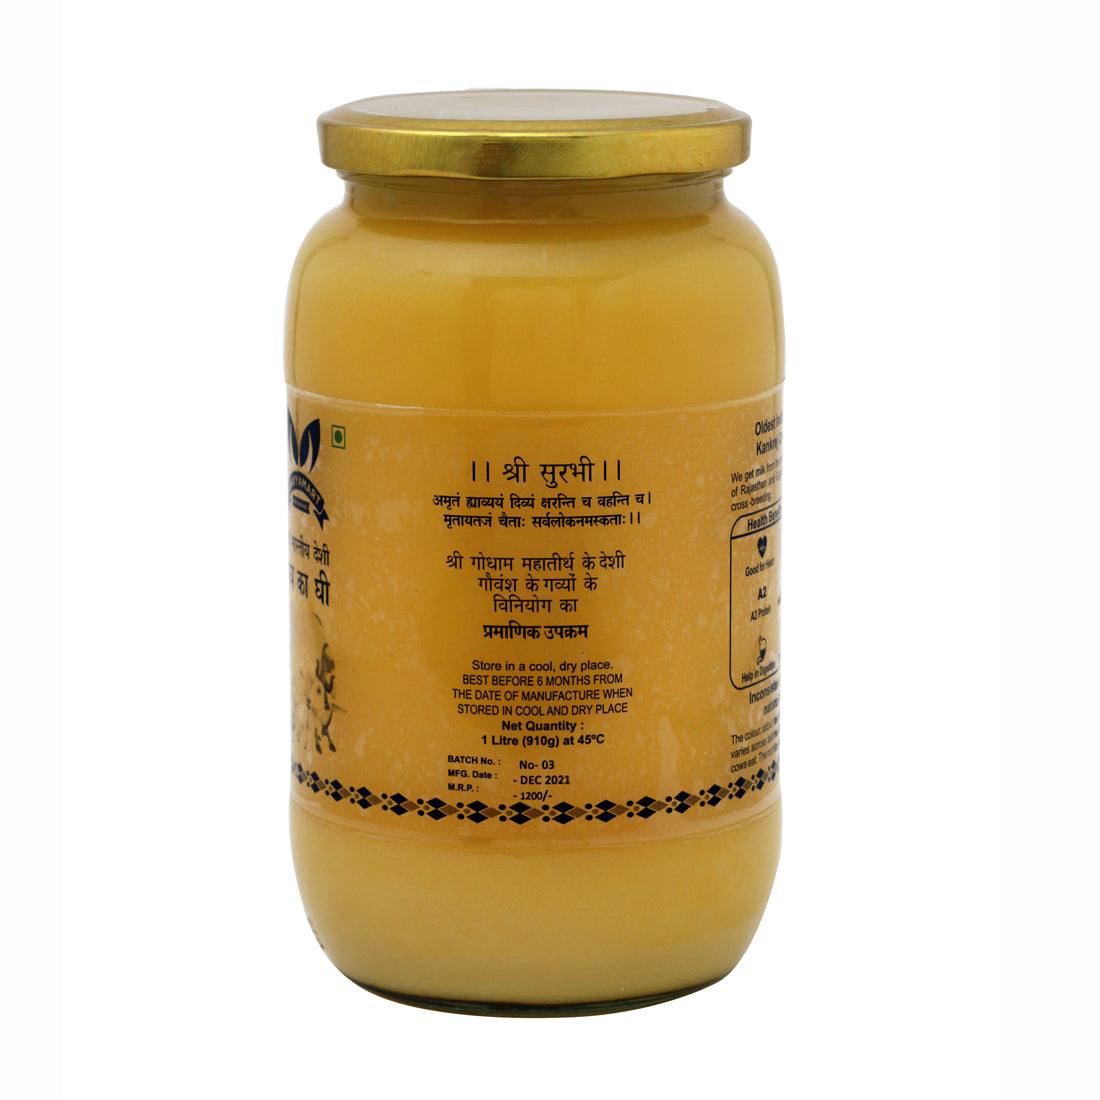 Gavyamart Buy Pure A2 cow ghee online |Best organic pure a2 Desi cow ghee | shudh desi ghee price | Glass Jar | Lab Tested